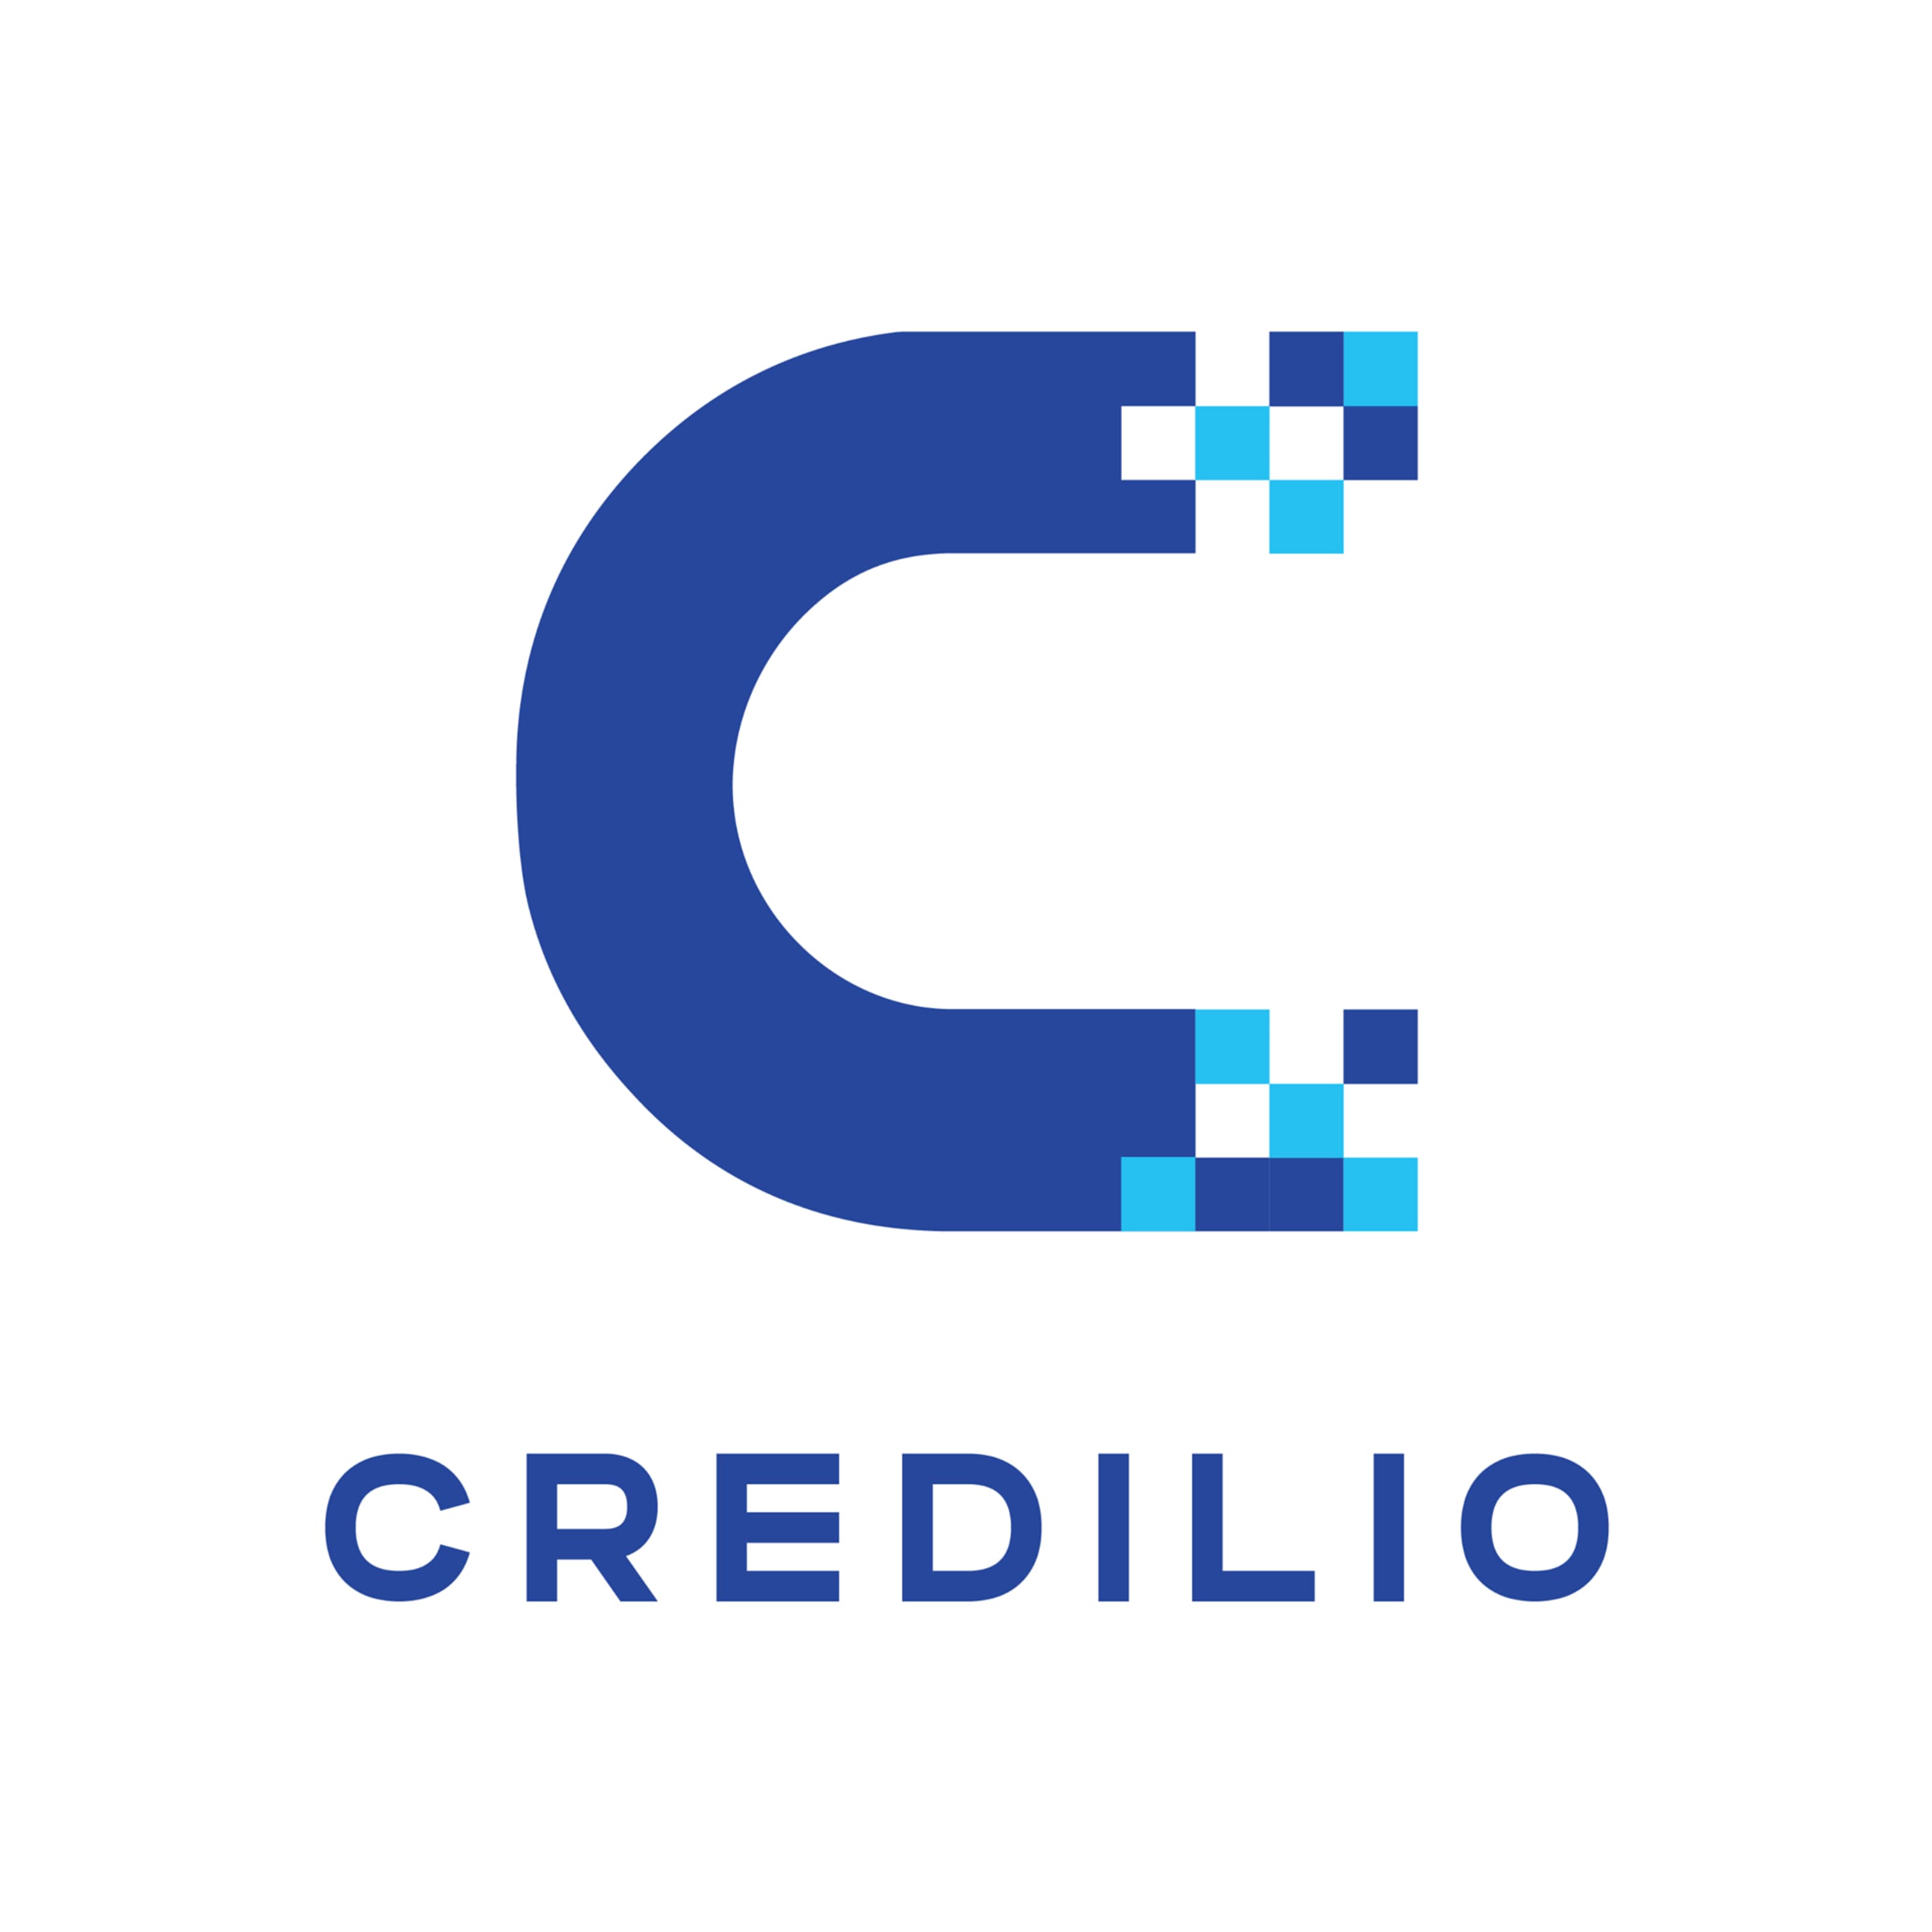 Credilio Financial Technologies Pvt. Ltd.'s logo